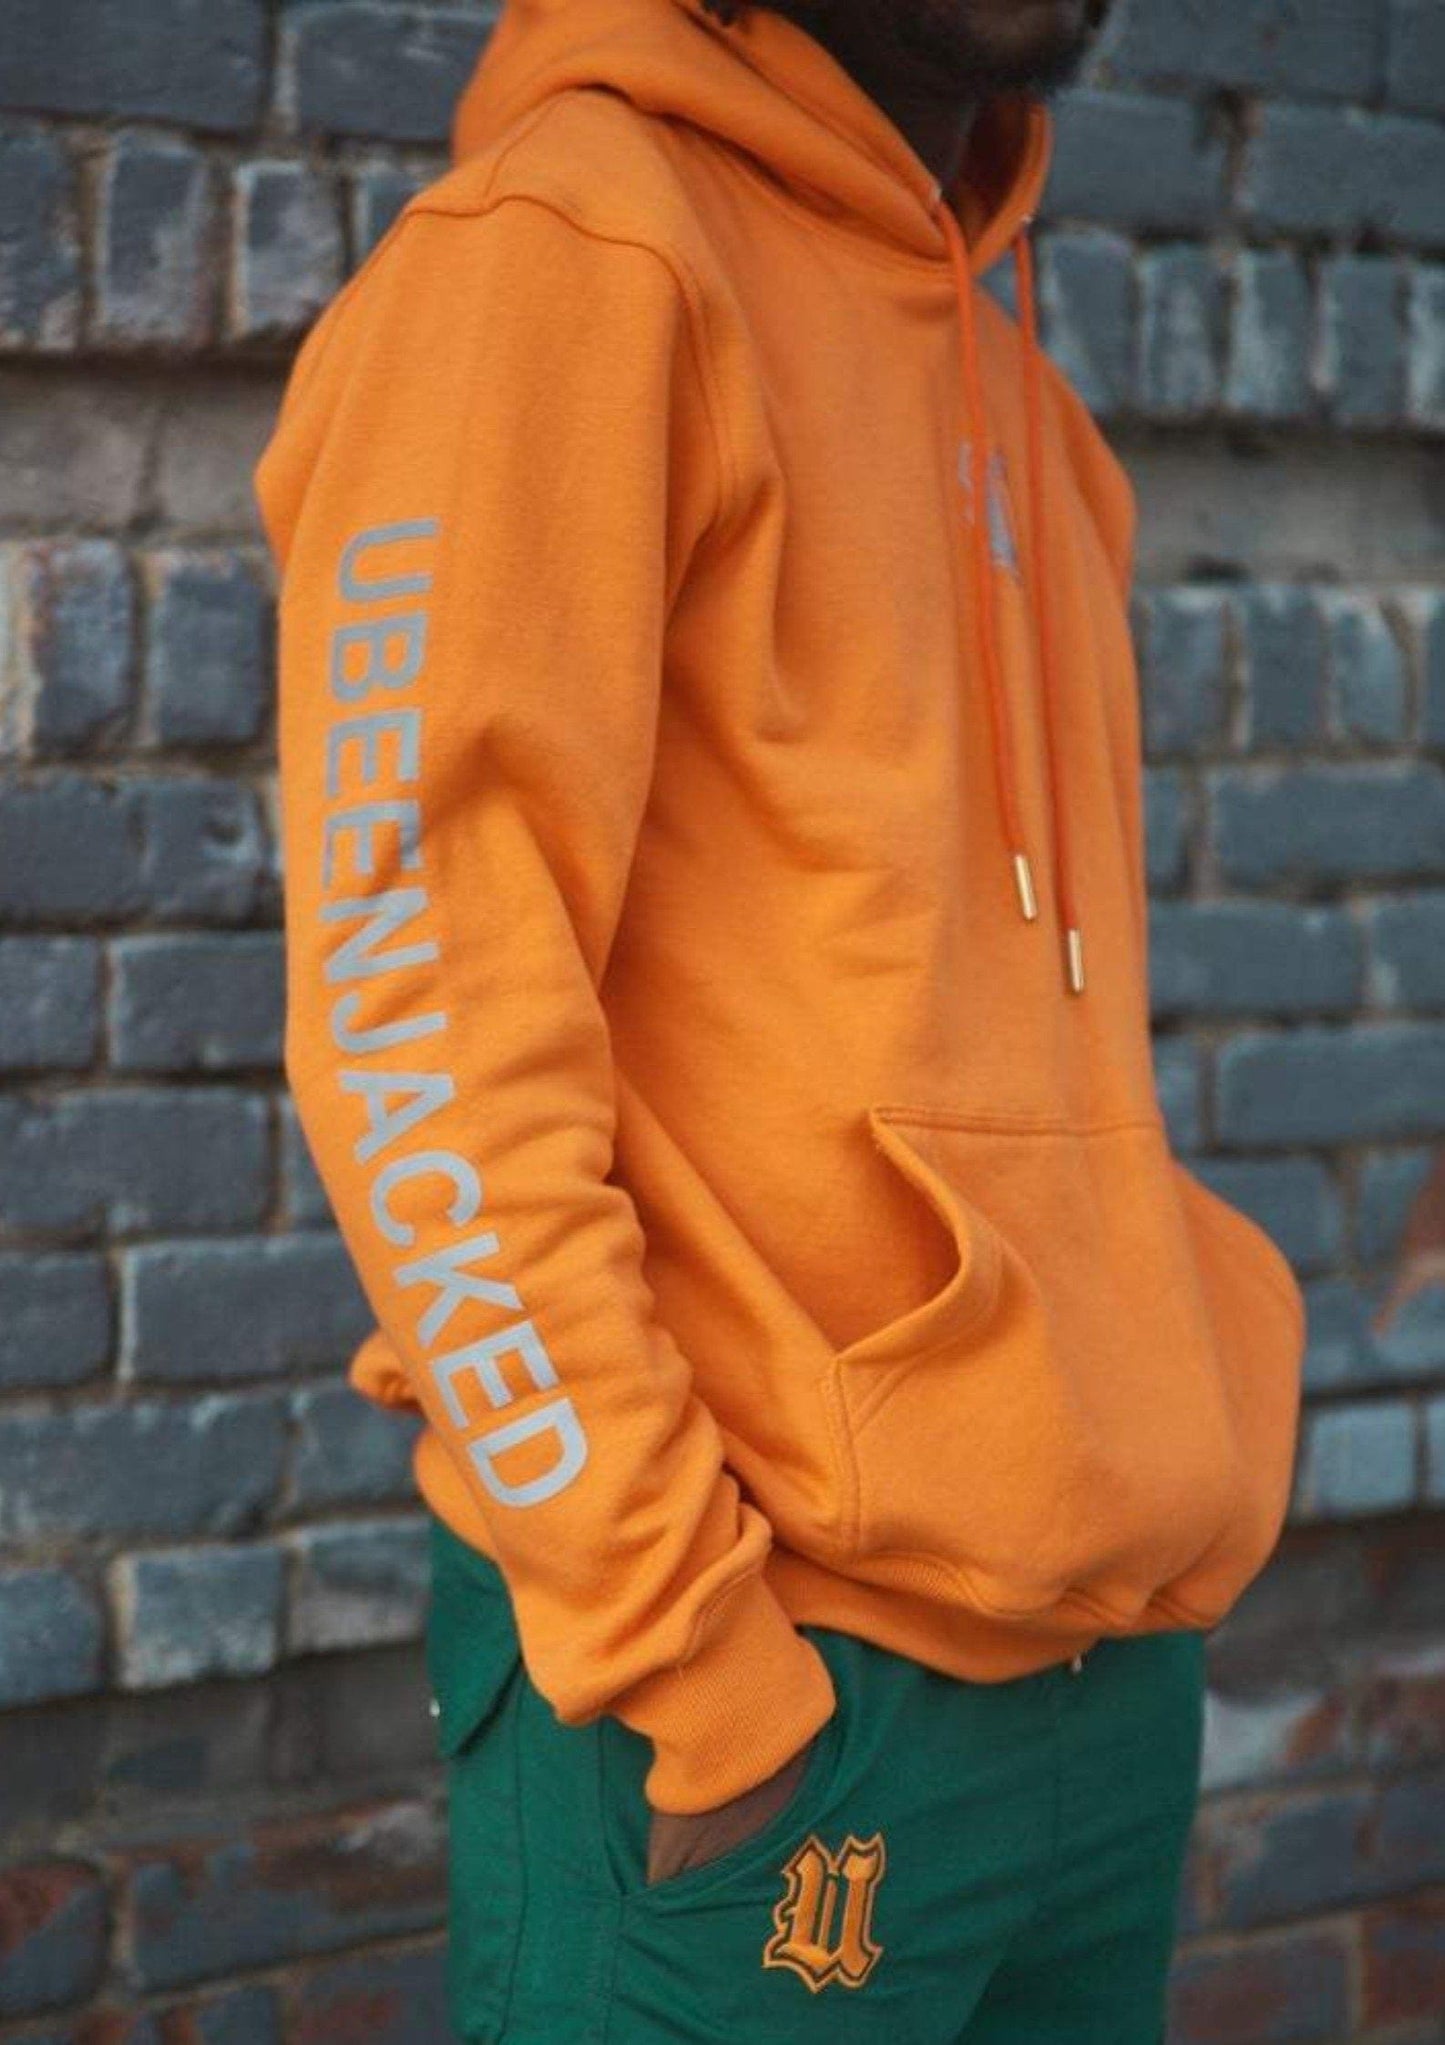 Side View Orange UBJ hoodie with reflective print on the arm